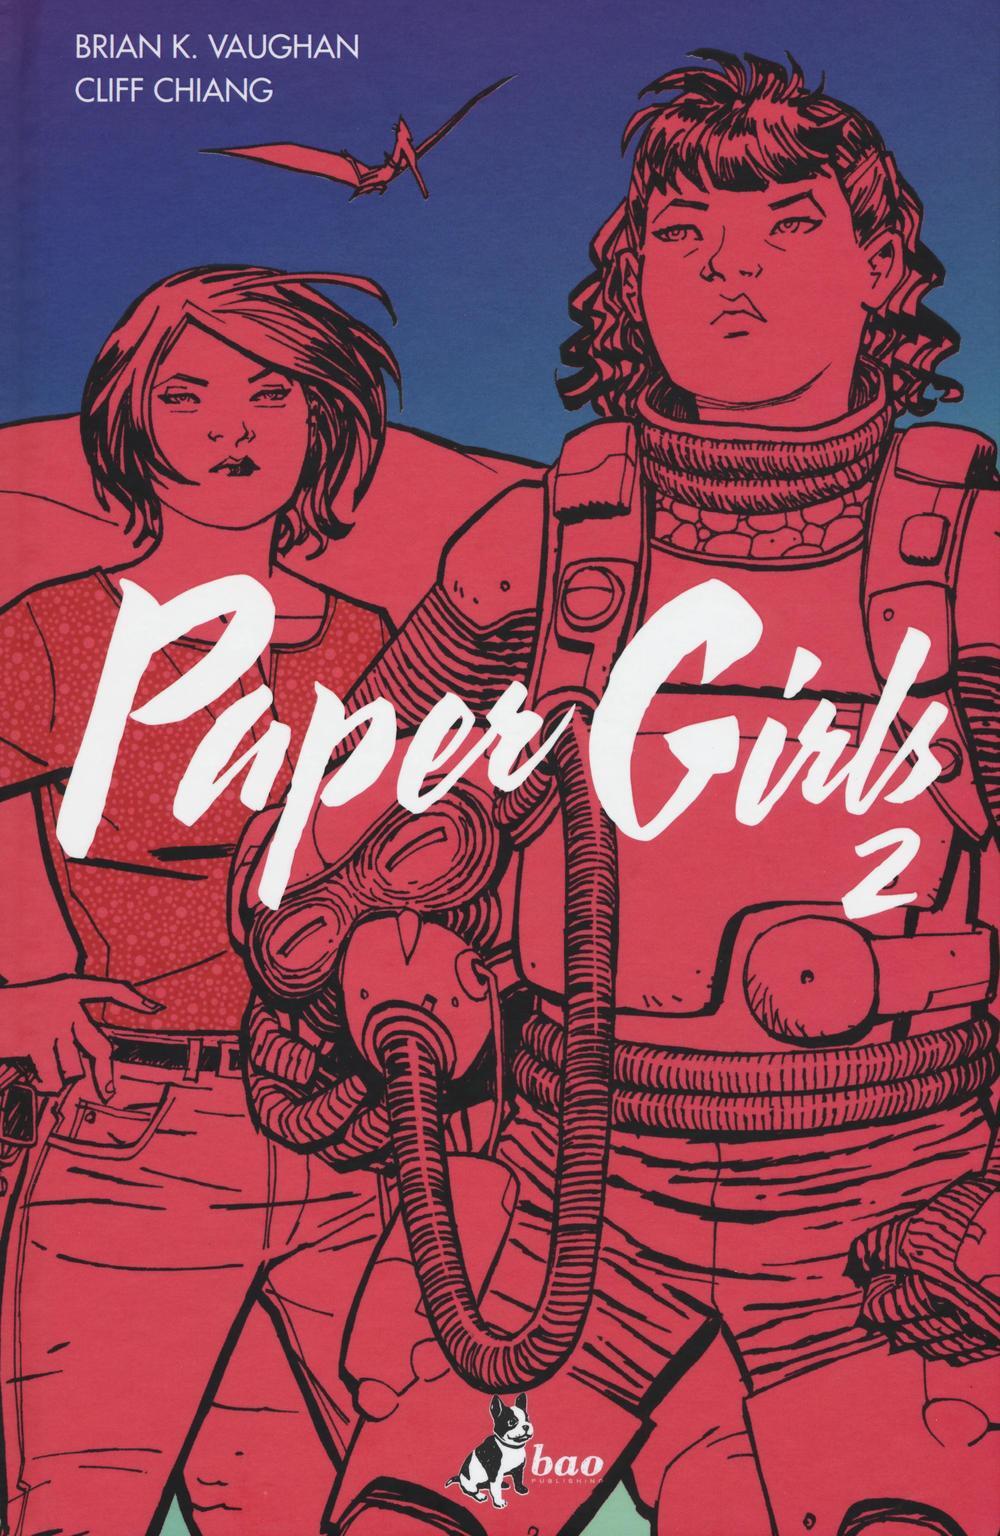 Paper girls Vol 2  Brian K Vaughan  Cliff Chiang Libro  Bao  